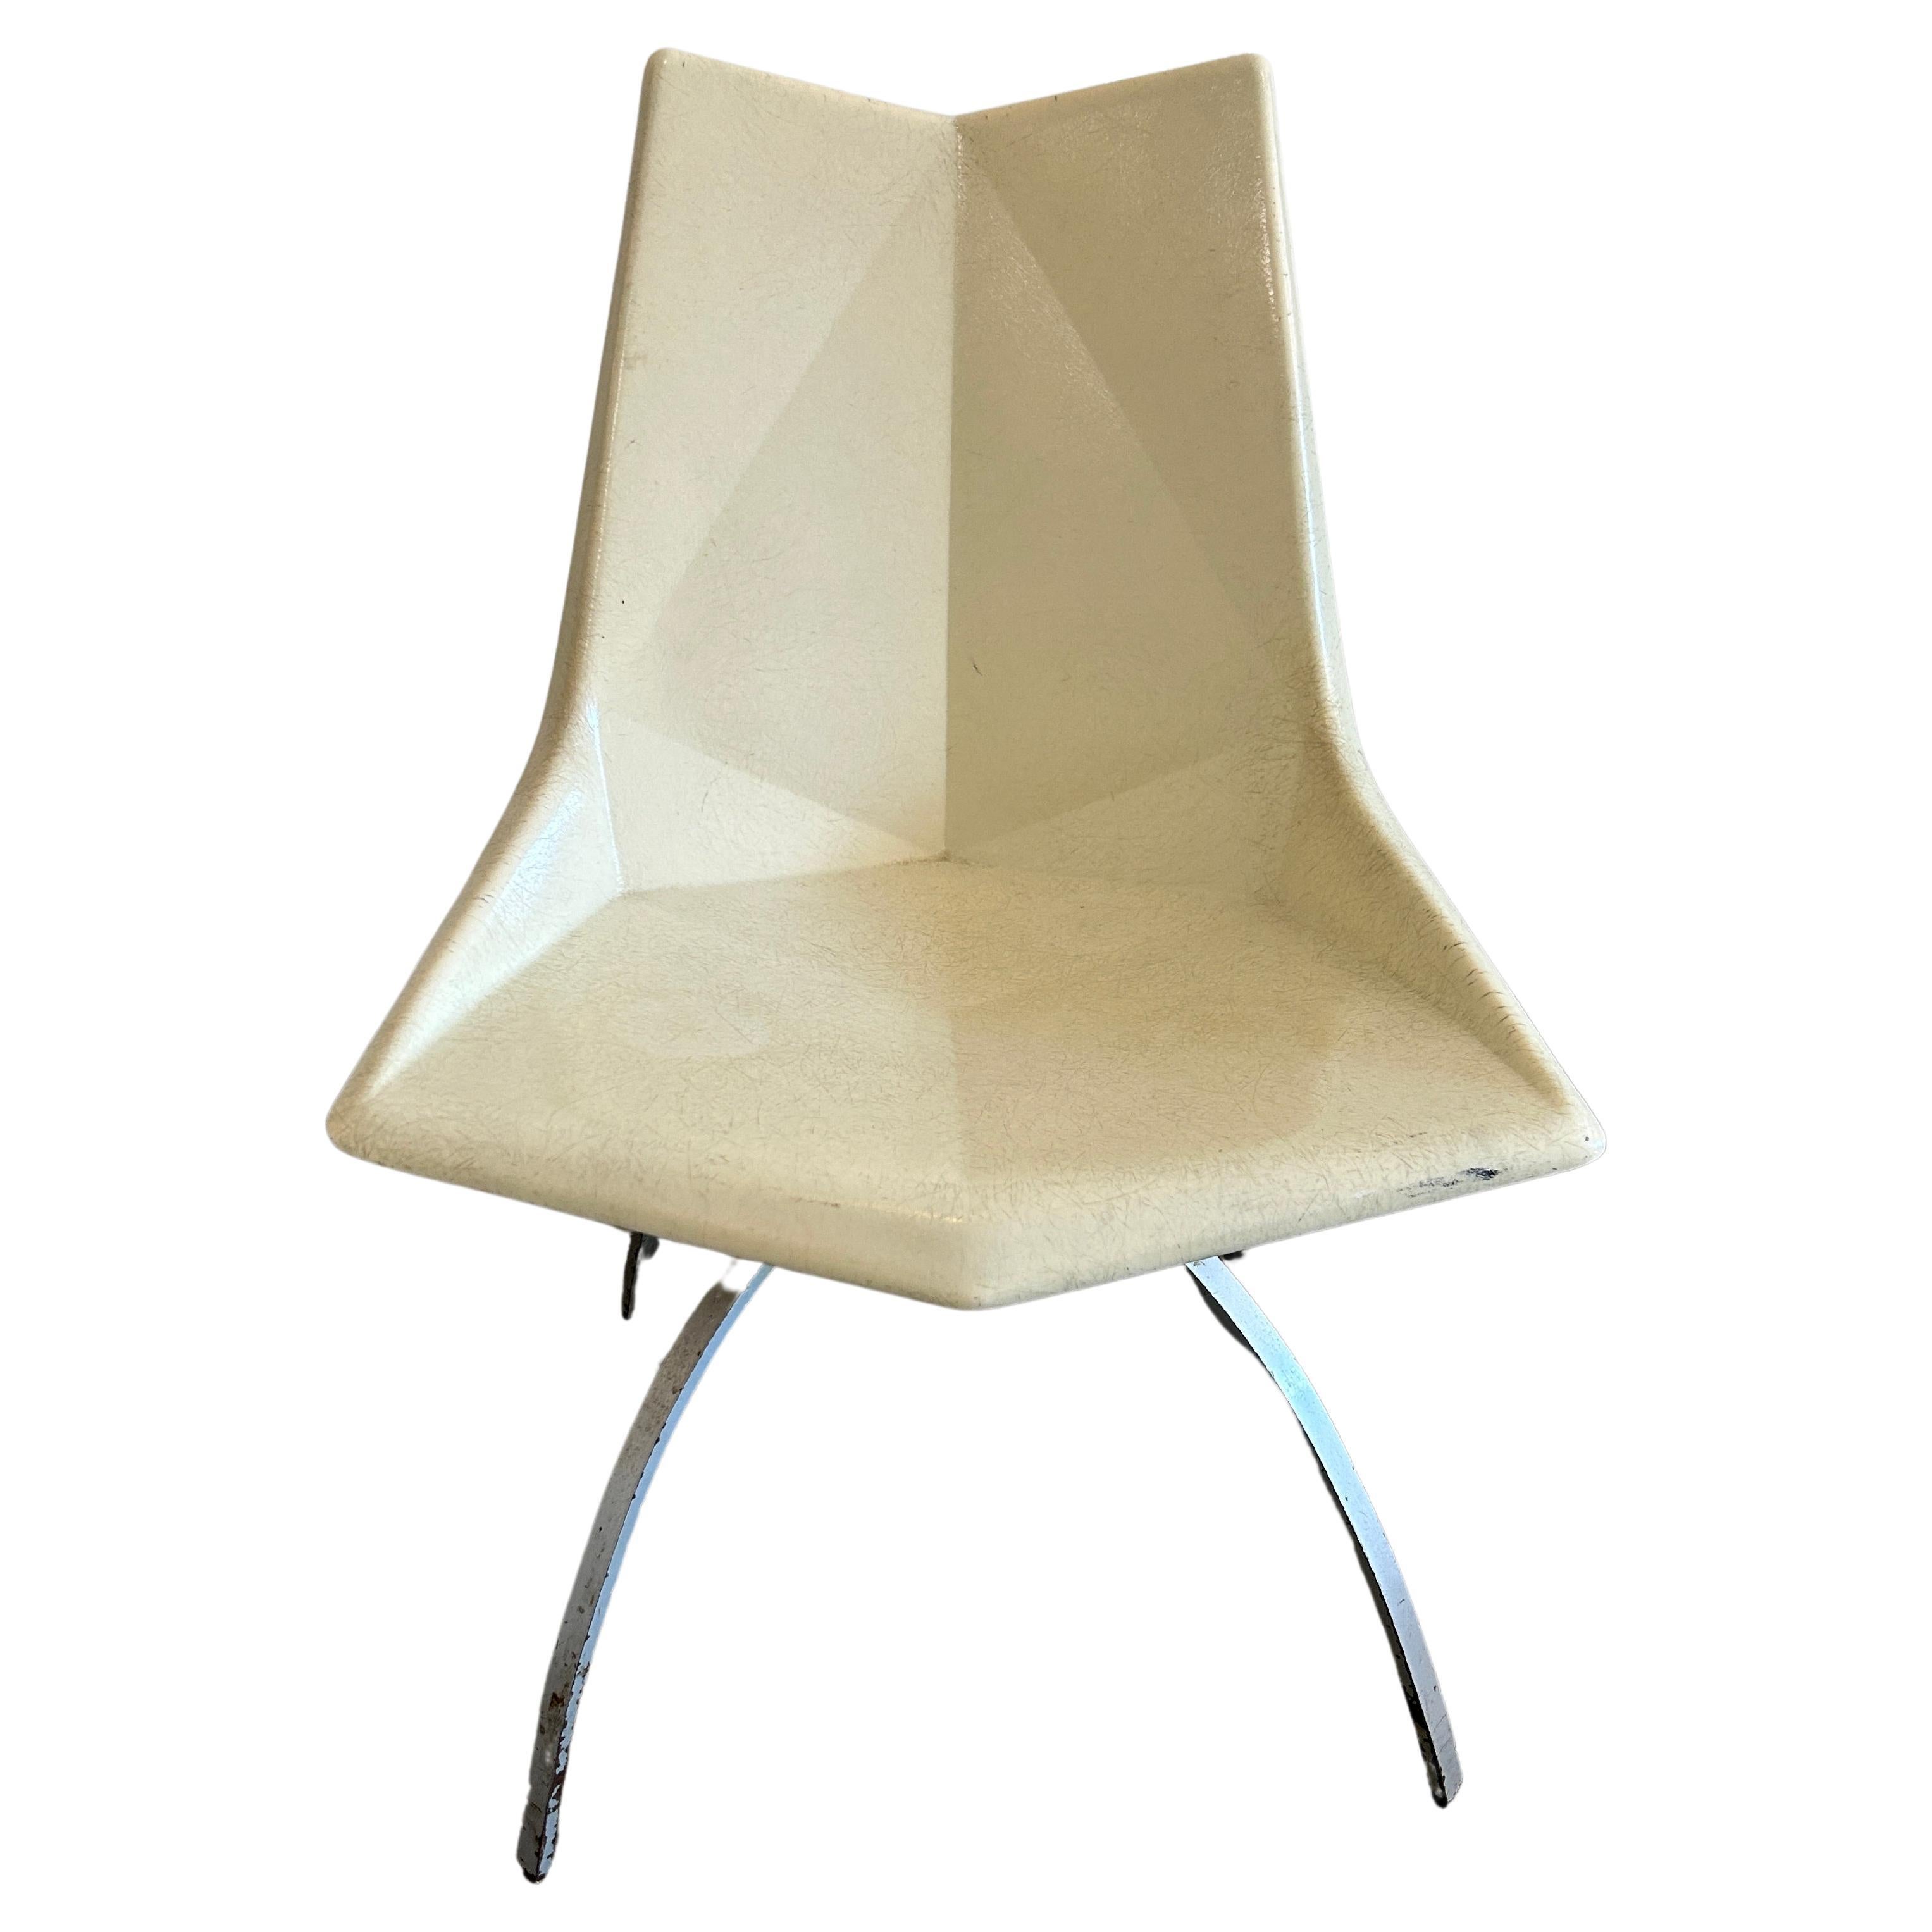  Original Midcentury white Paul McCobb Origami Fiberglass Chair spider base